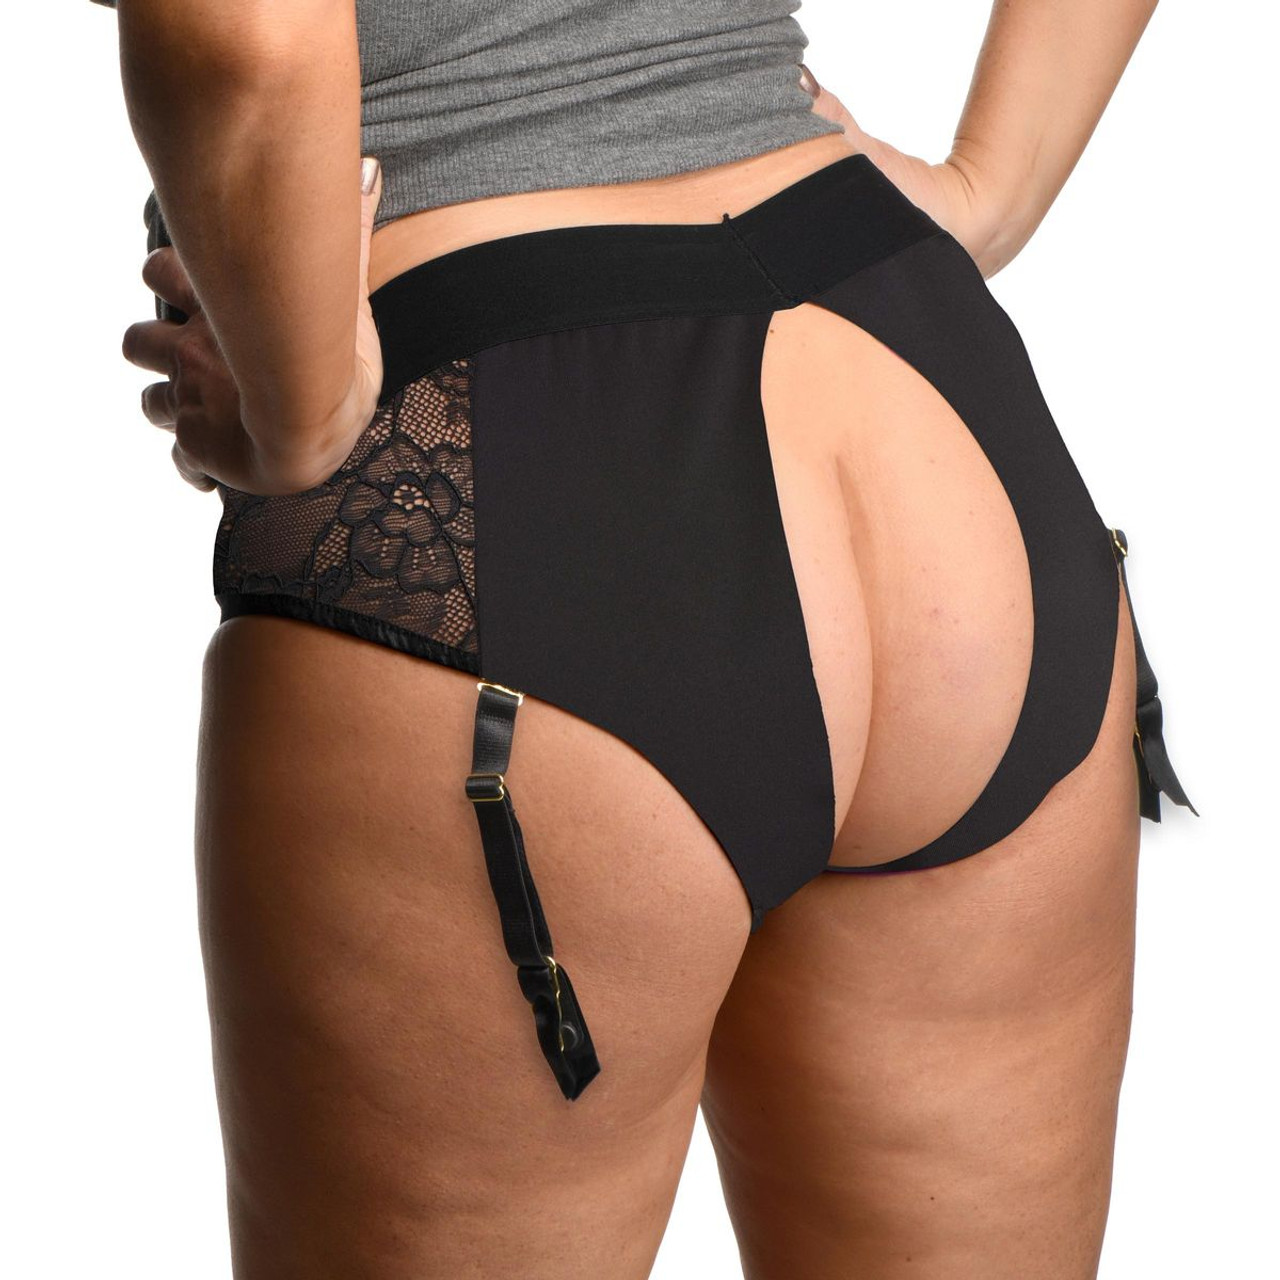 U Laced Seductress Panty Harness product image